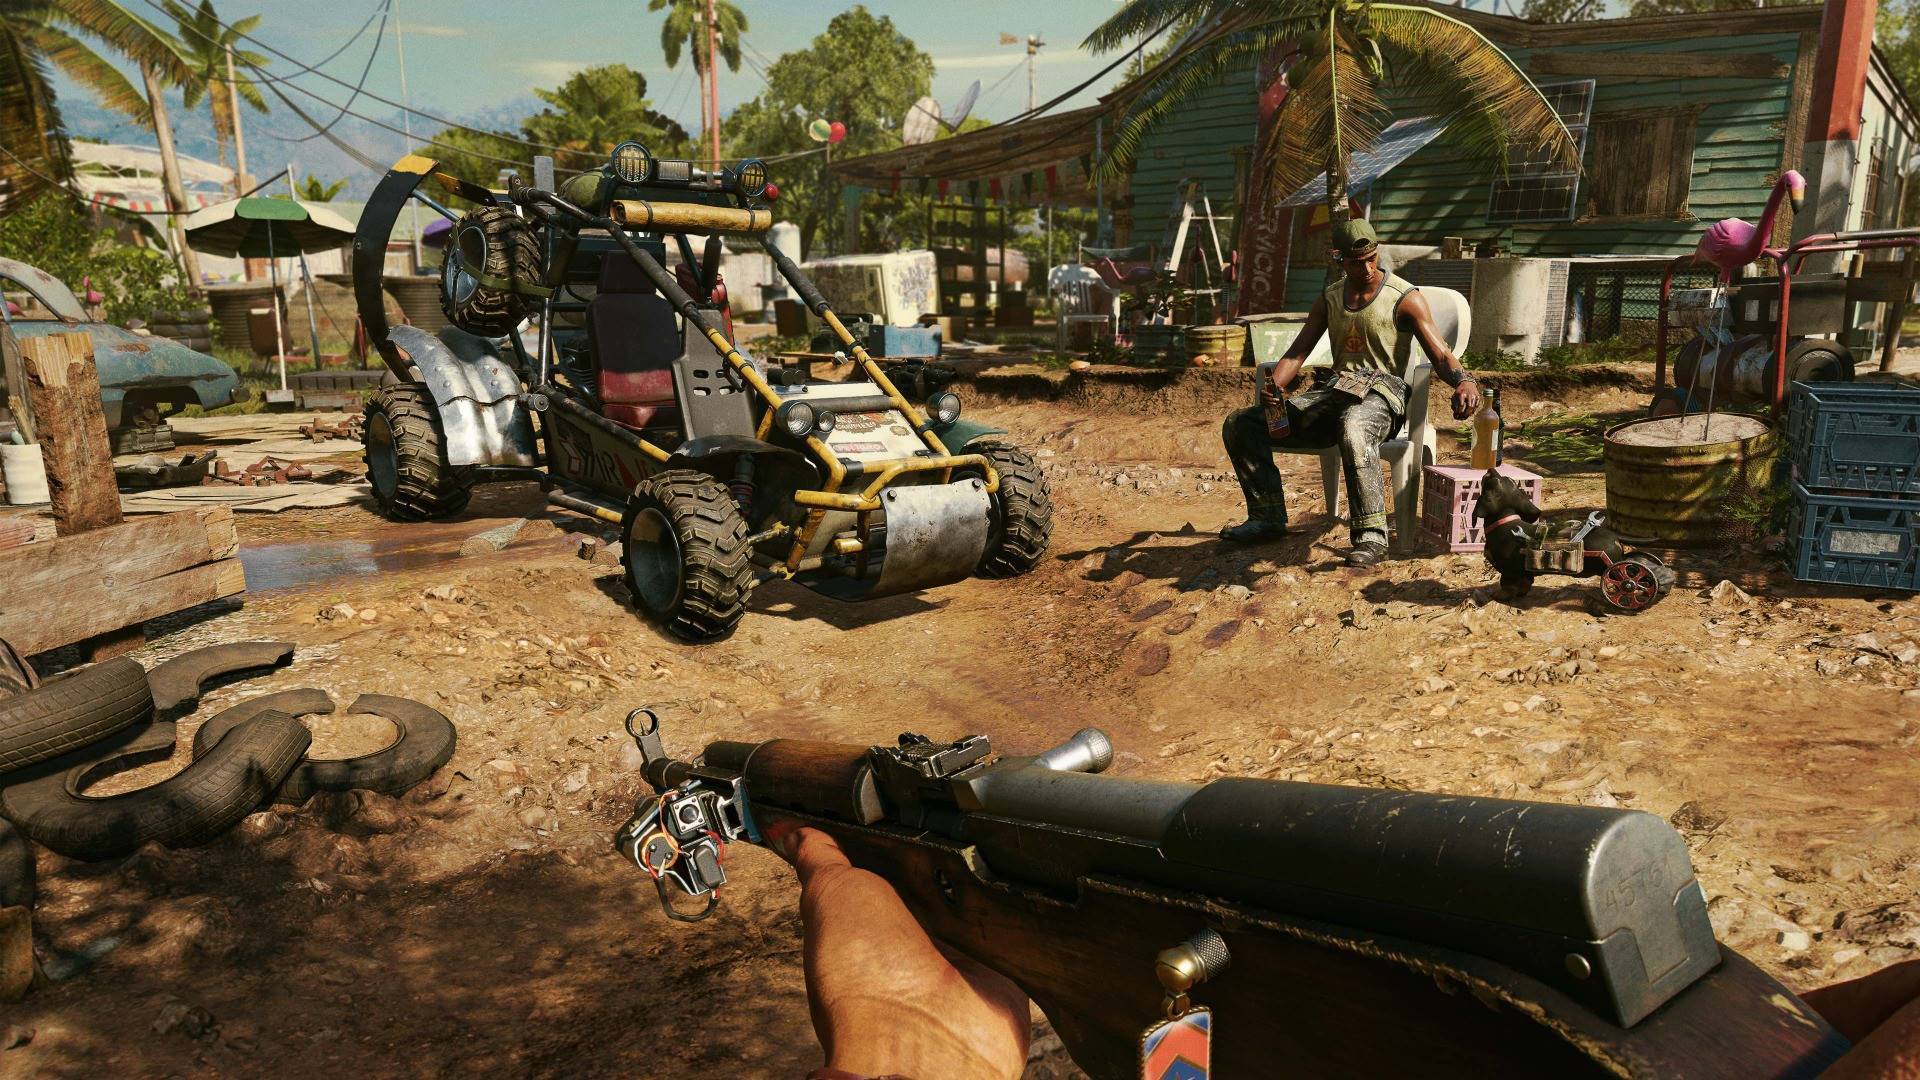 Far Cry 6 Steam Account  Buy cheap on